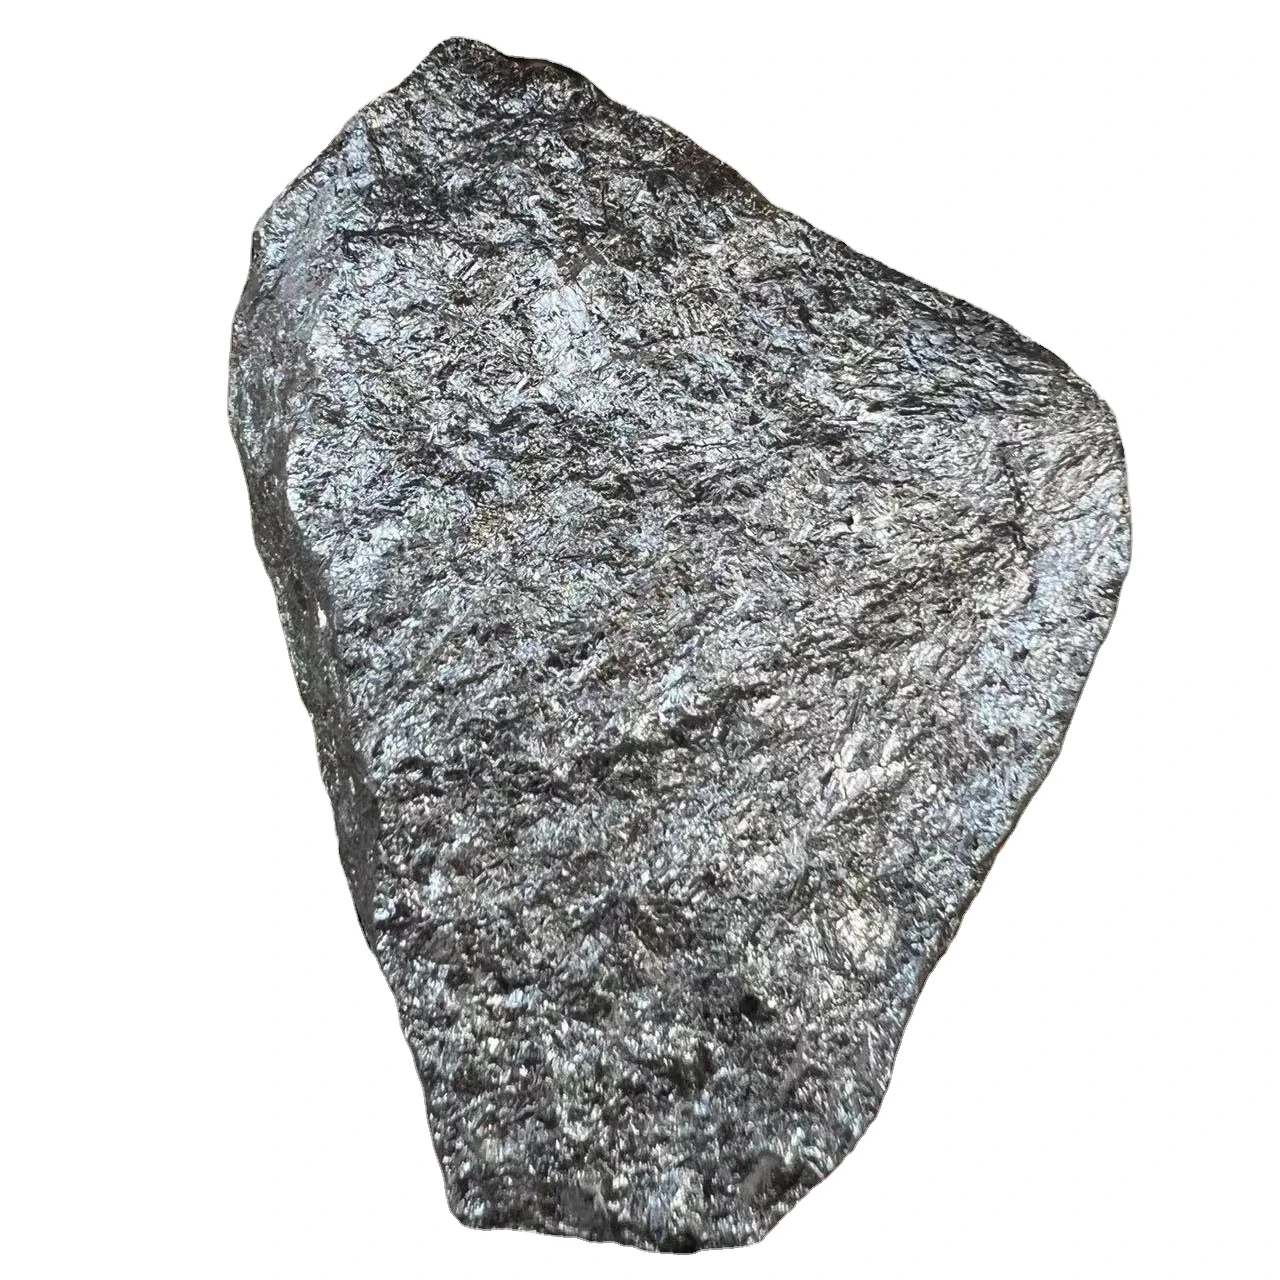 Top Minerals Metallurgy Silicon Metal Grade 441 Lump 99% purity